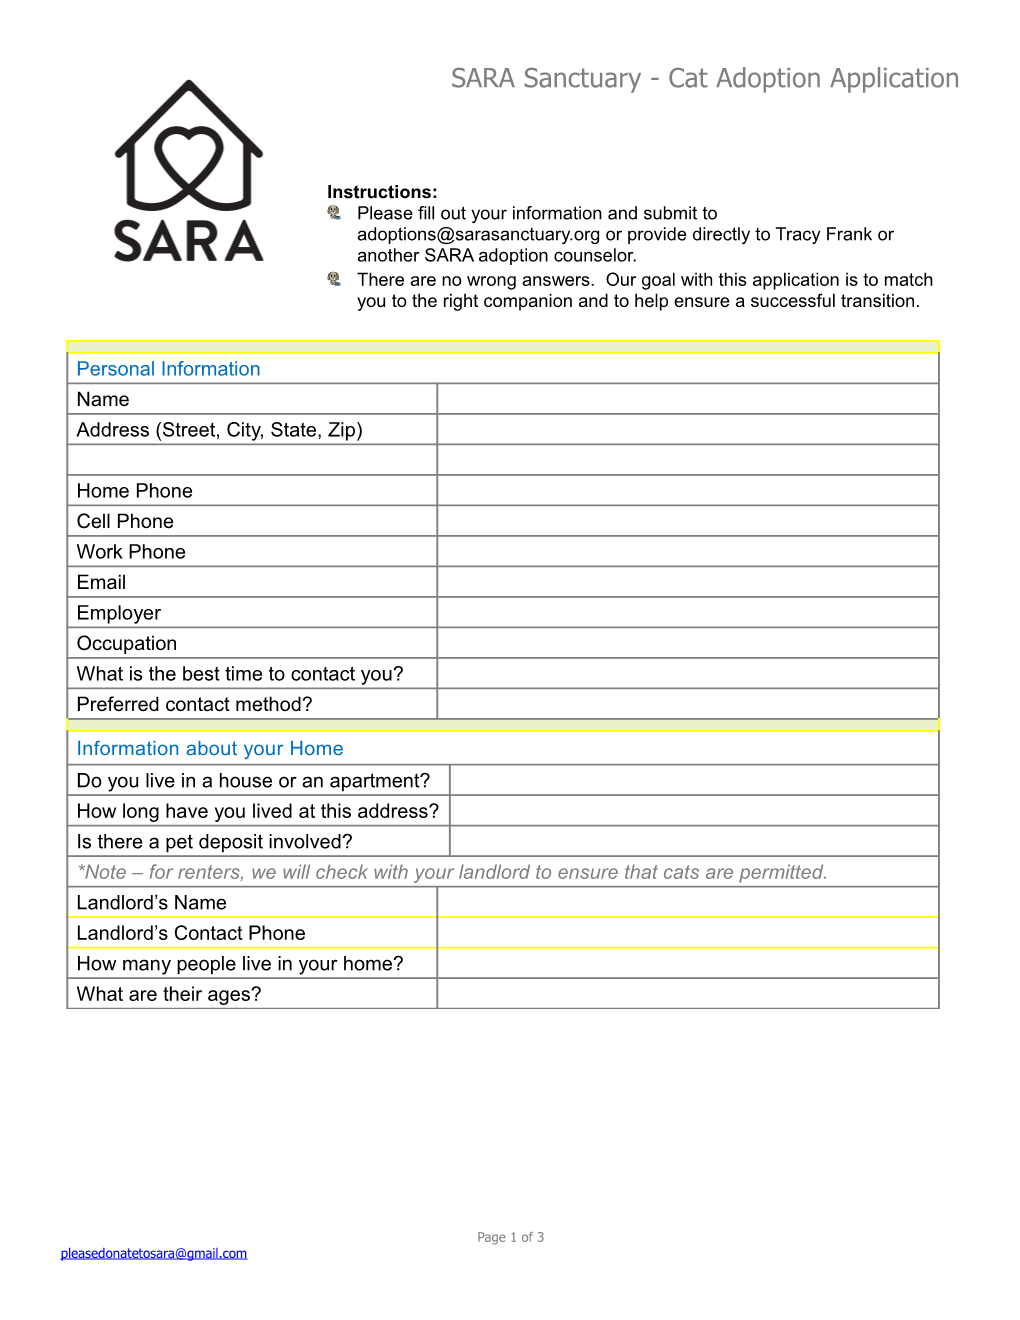 SARA Sanctuary - Cat Adoption Application